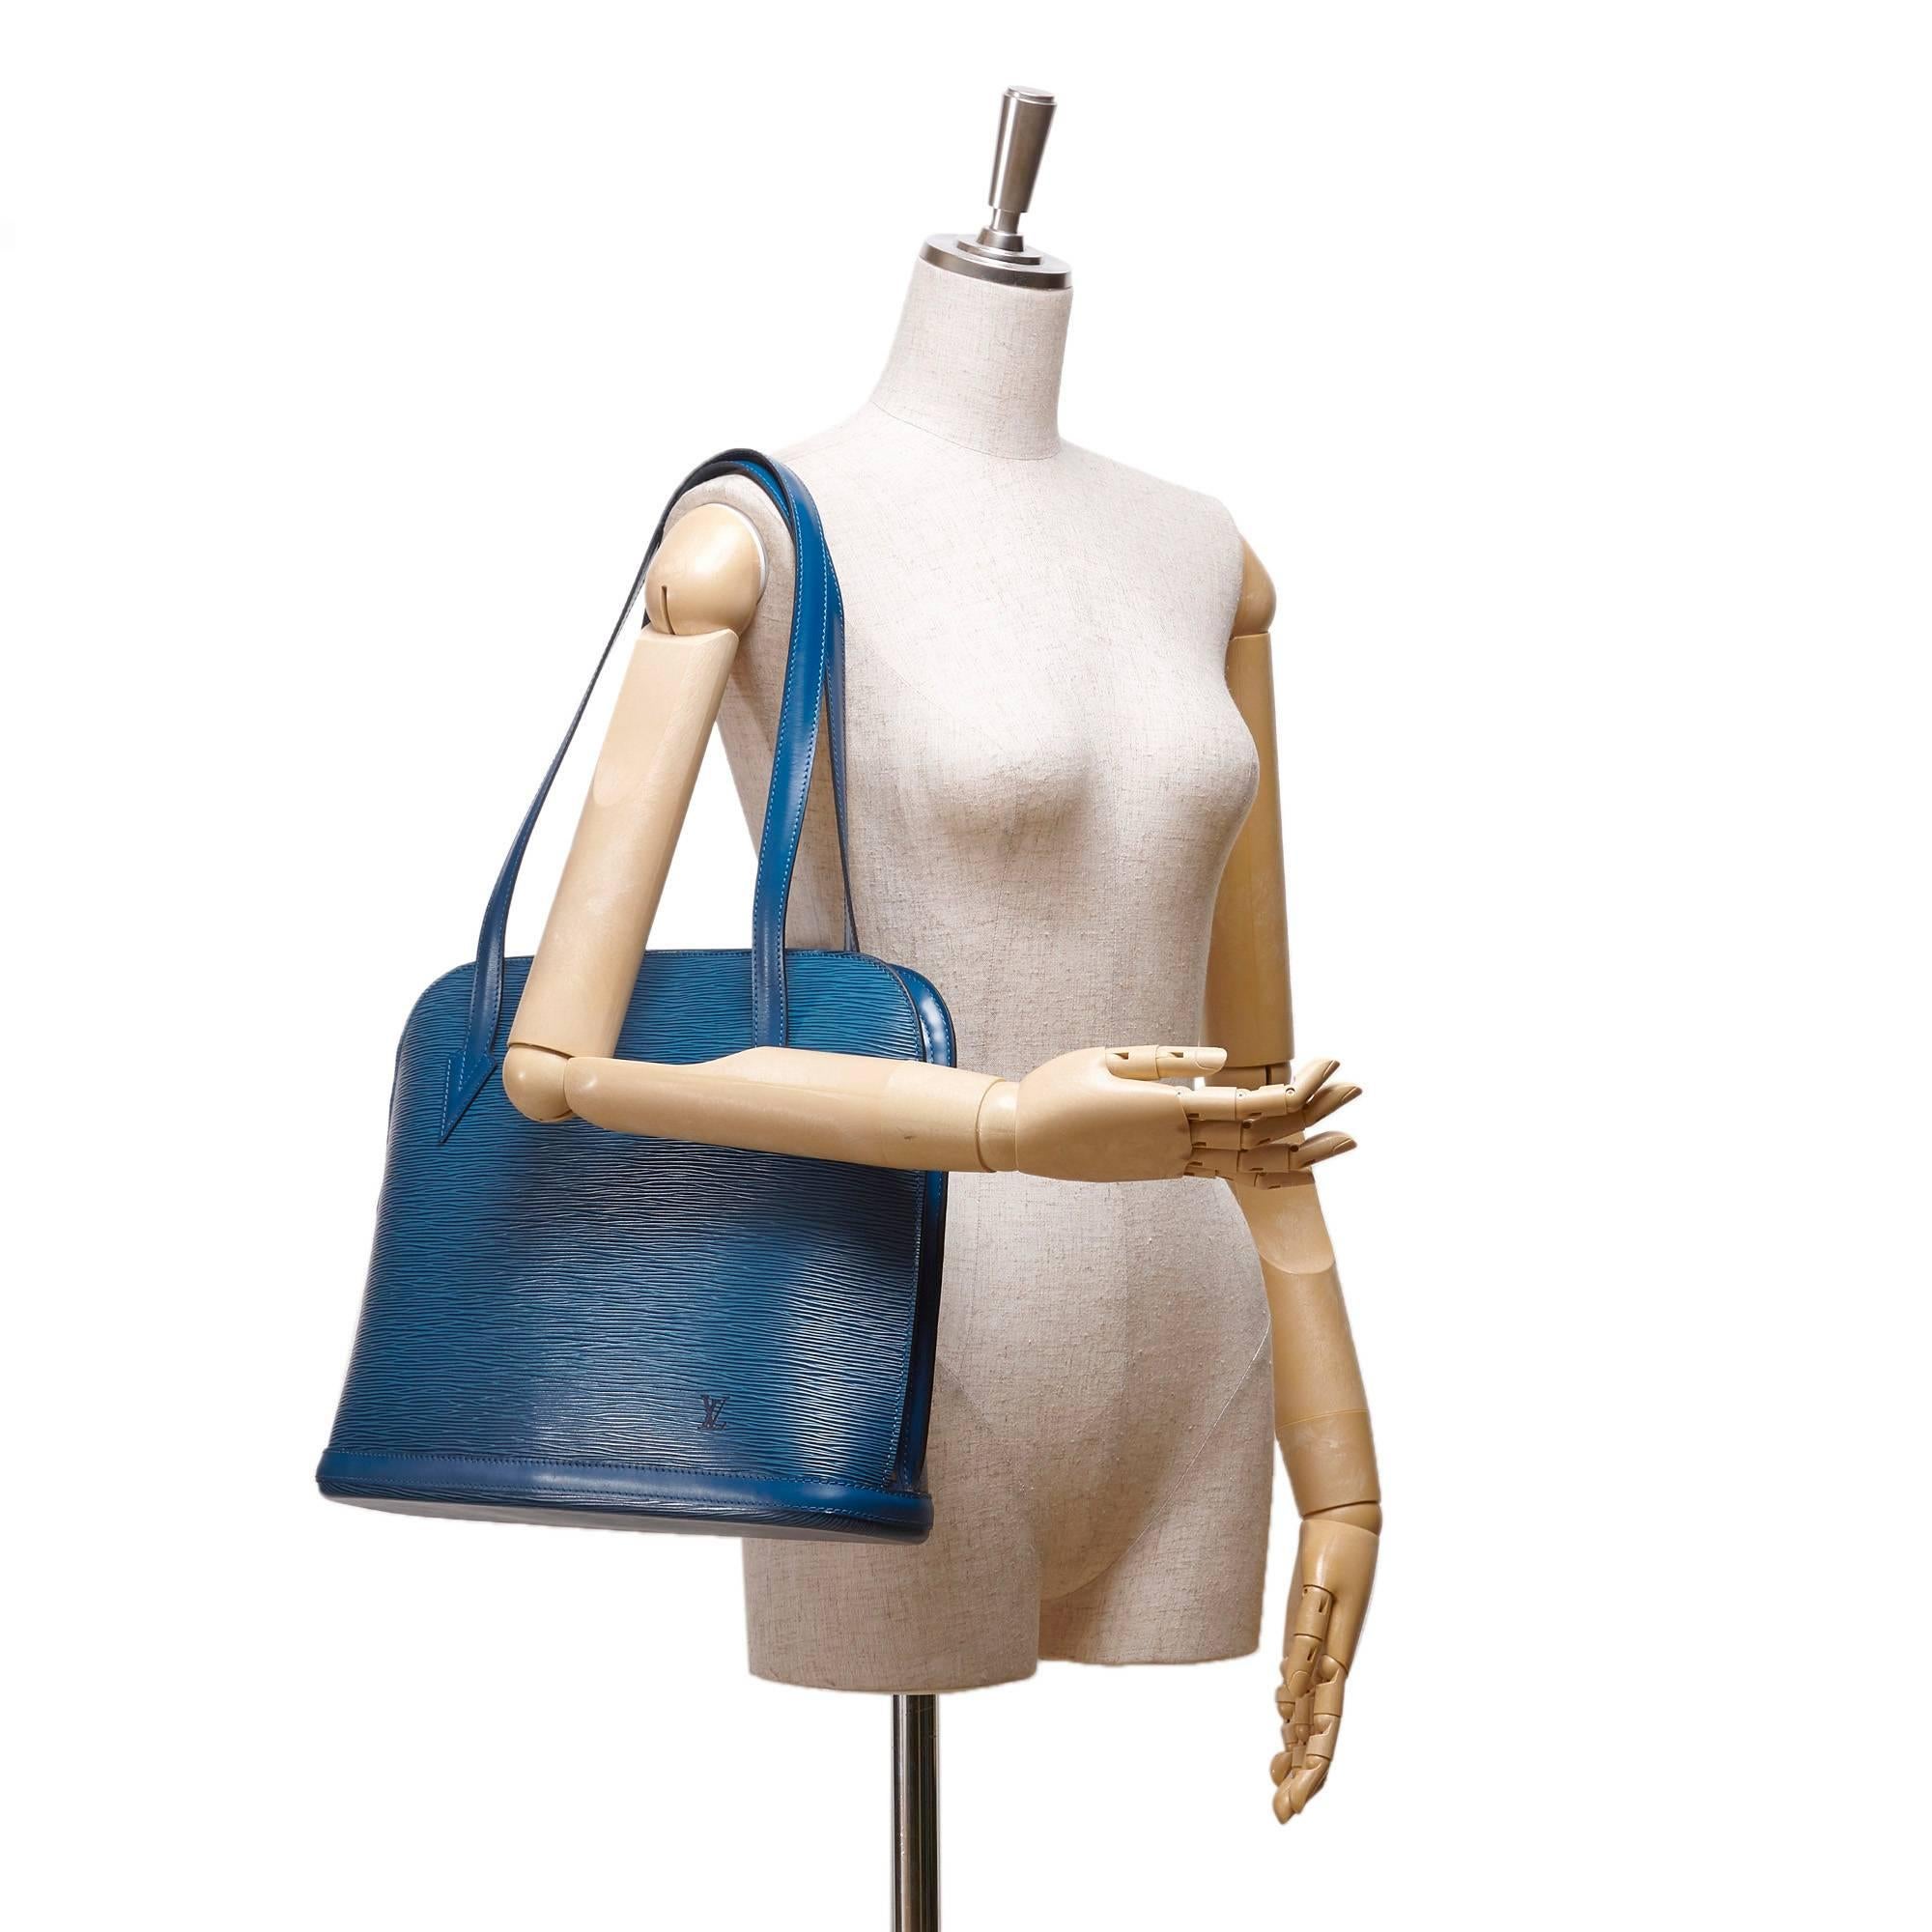 - This Vintage 90s Louis Vuitton blue Lussac handbag features an epi leather body, flat straps, a top zip closure, and an interior zip pocket.

- Made in France. 

- Size: 38cm x 30cm x 12cm. Shoulder Drop: 40cm. 

- Serial No: VI 1905. 

- Please